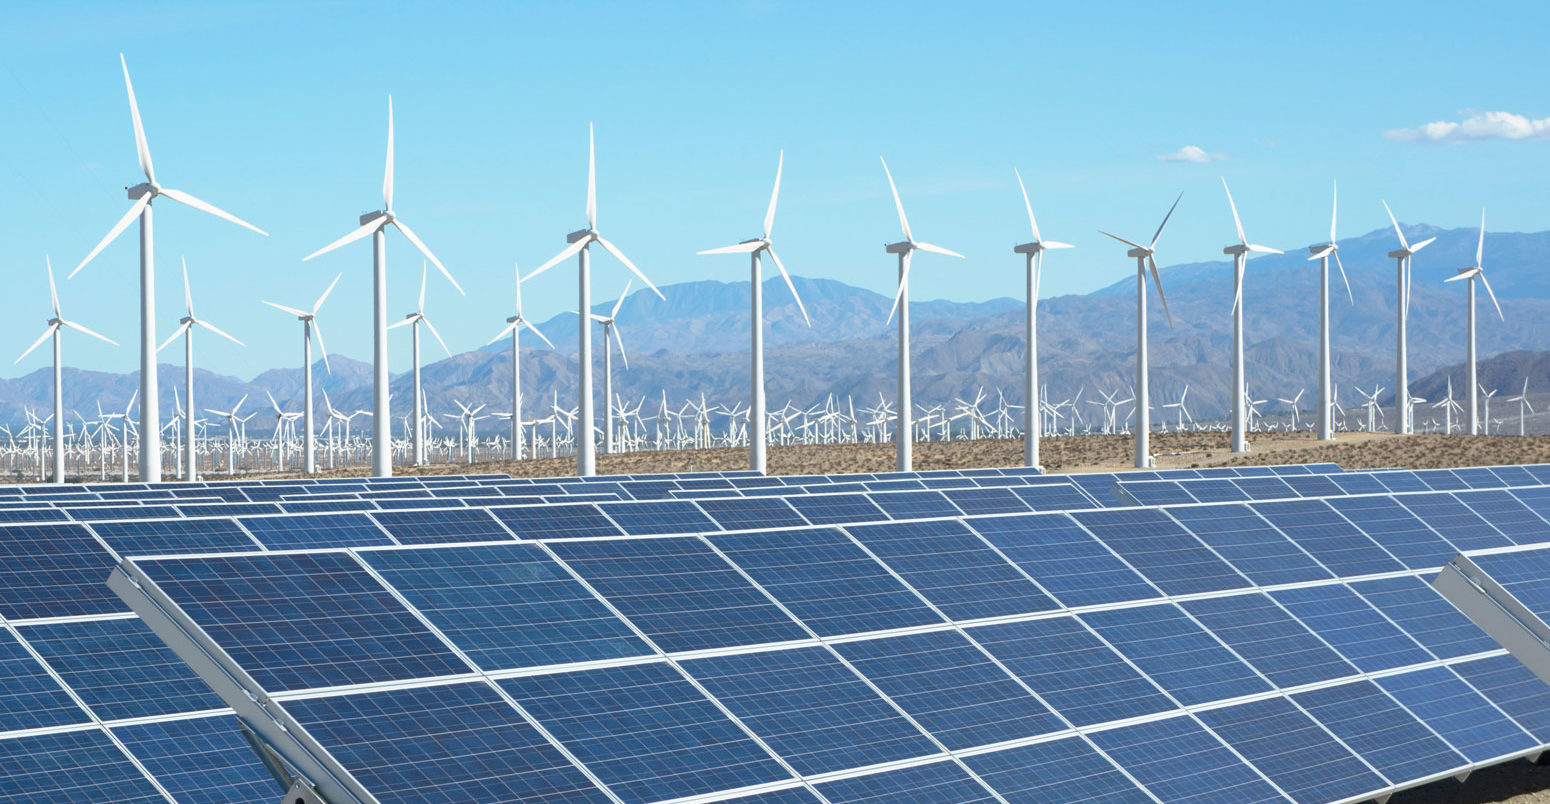 Photovoltaic solar panels and wind turbines, San Gorgonio Pass Wind Farm California